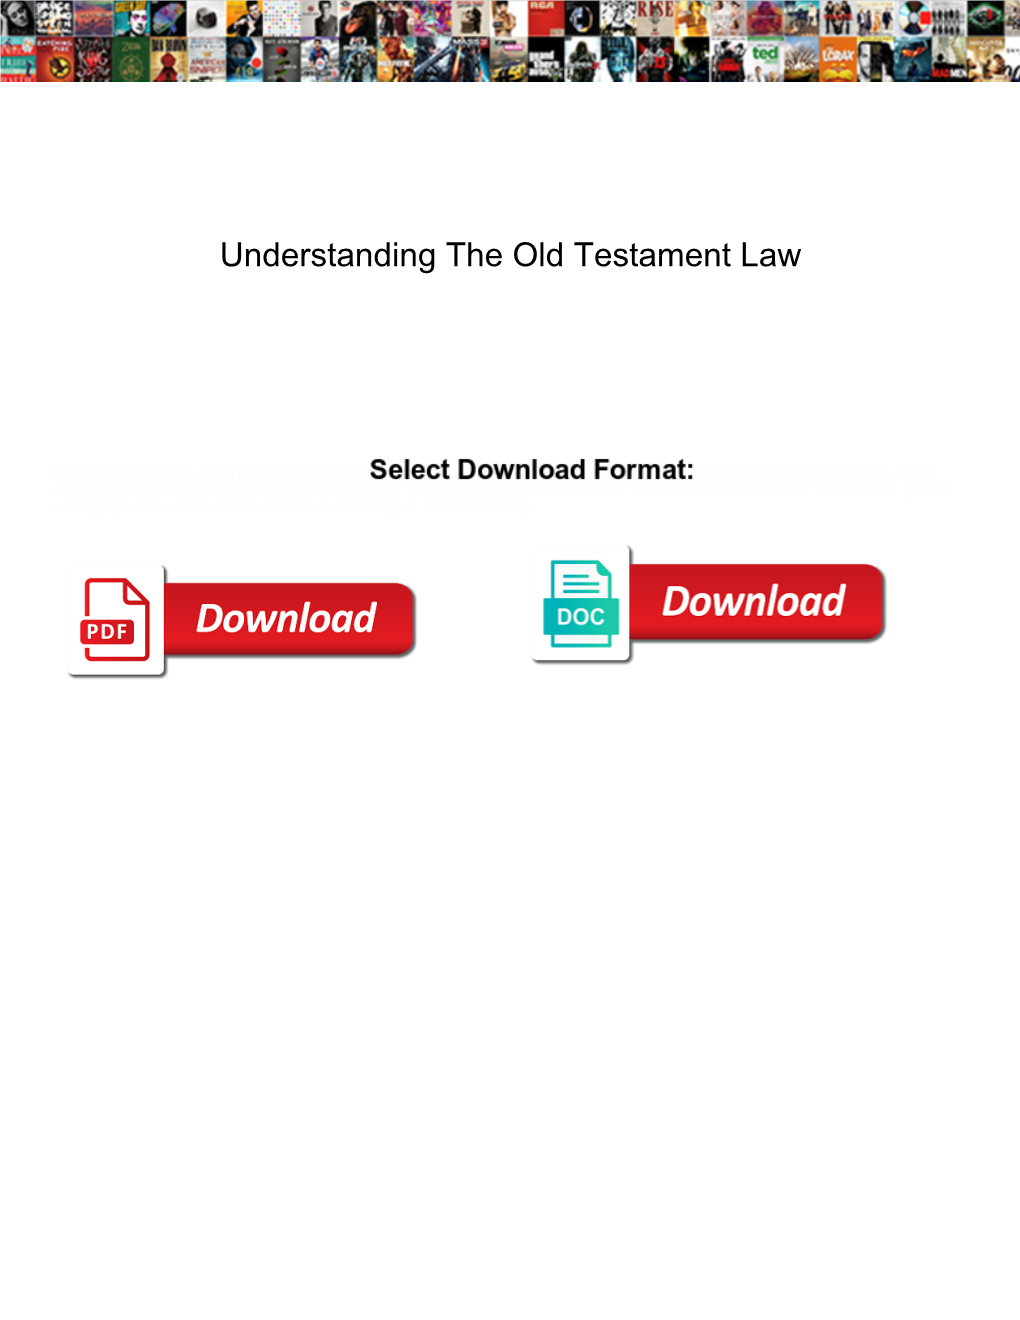 Understanding the Old Testament Law